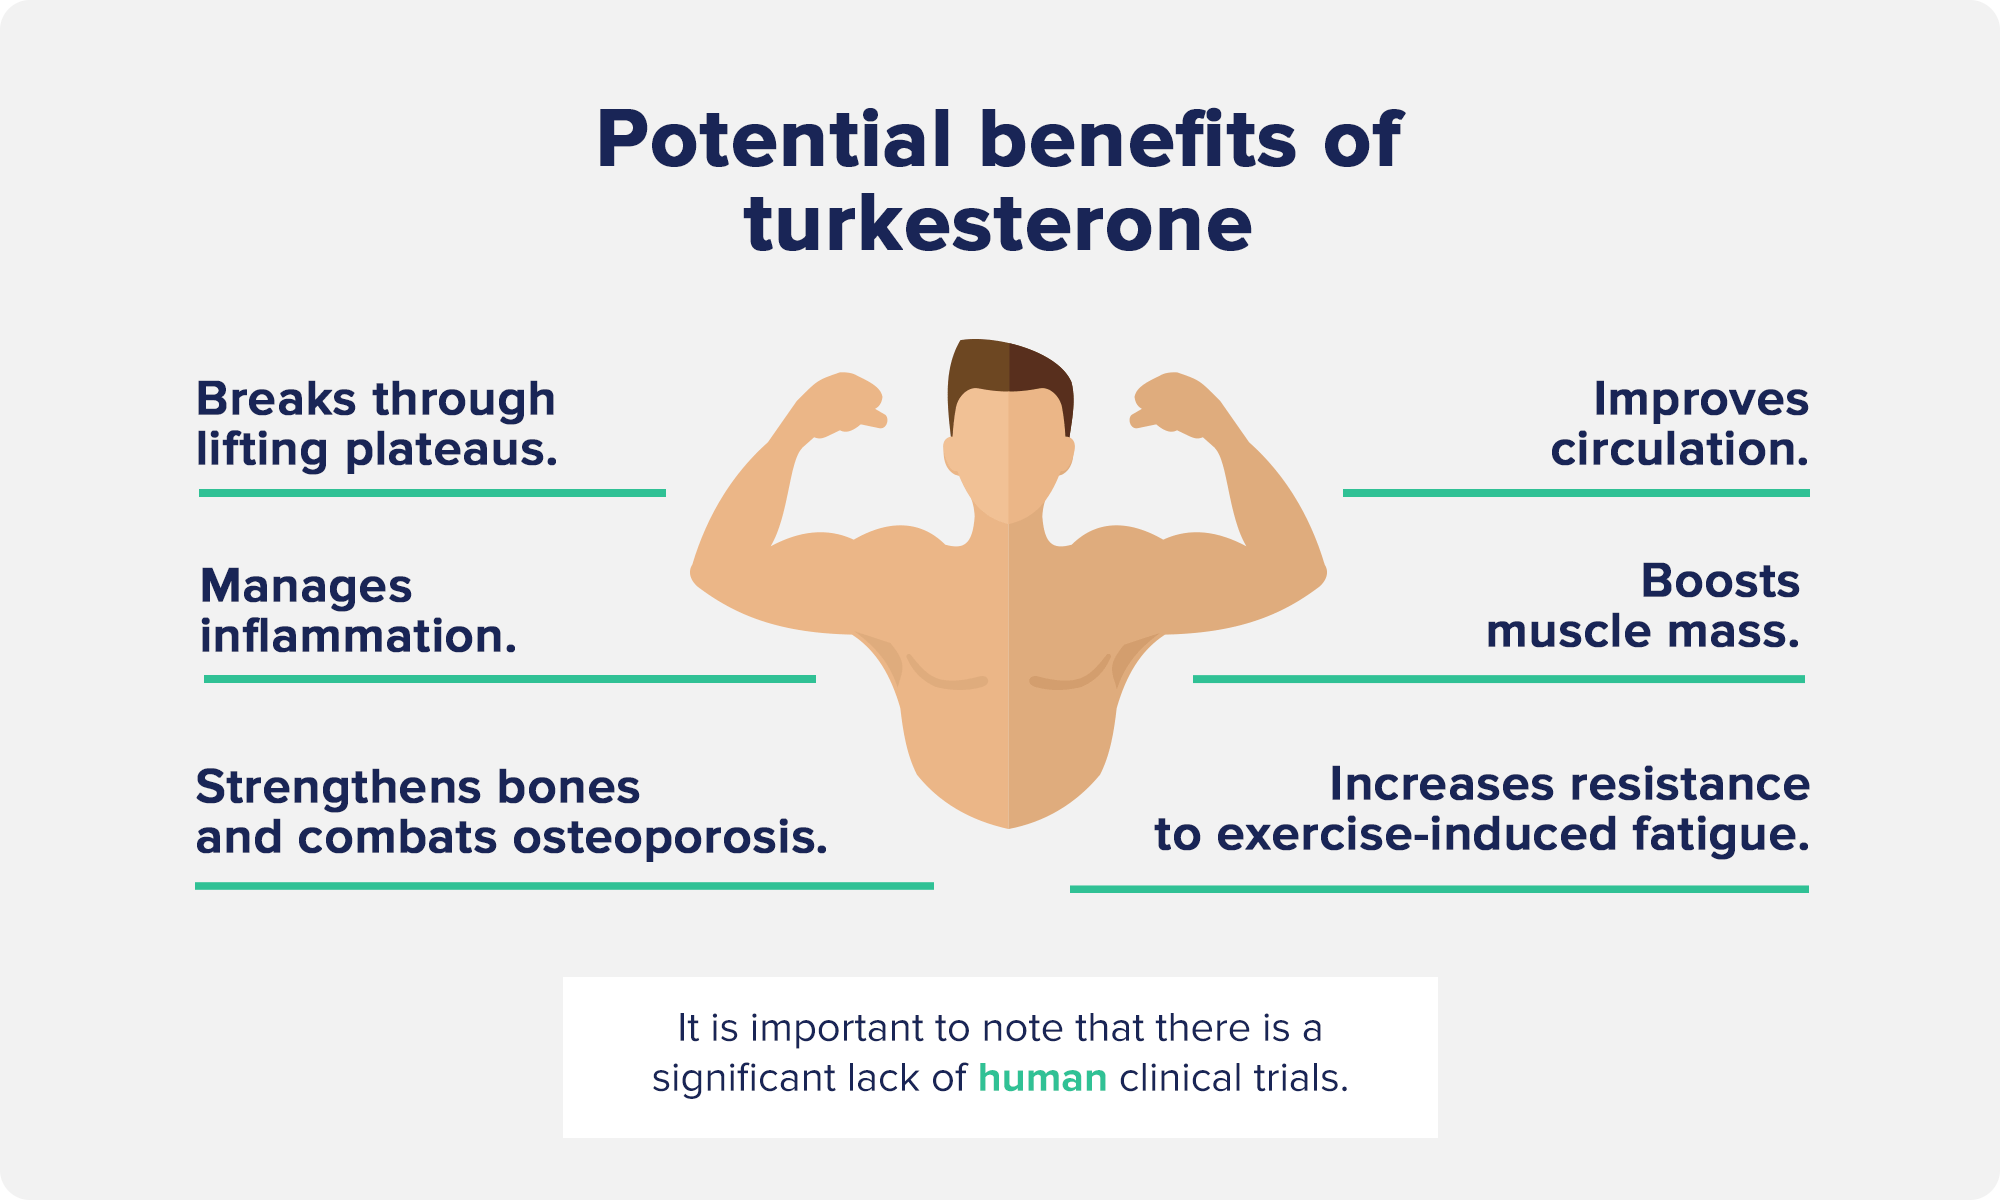 Potential benefits of turkesterone